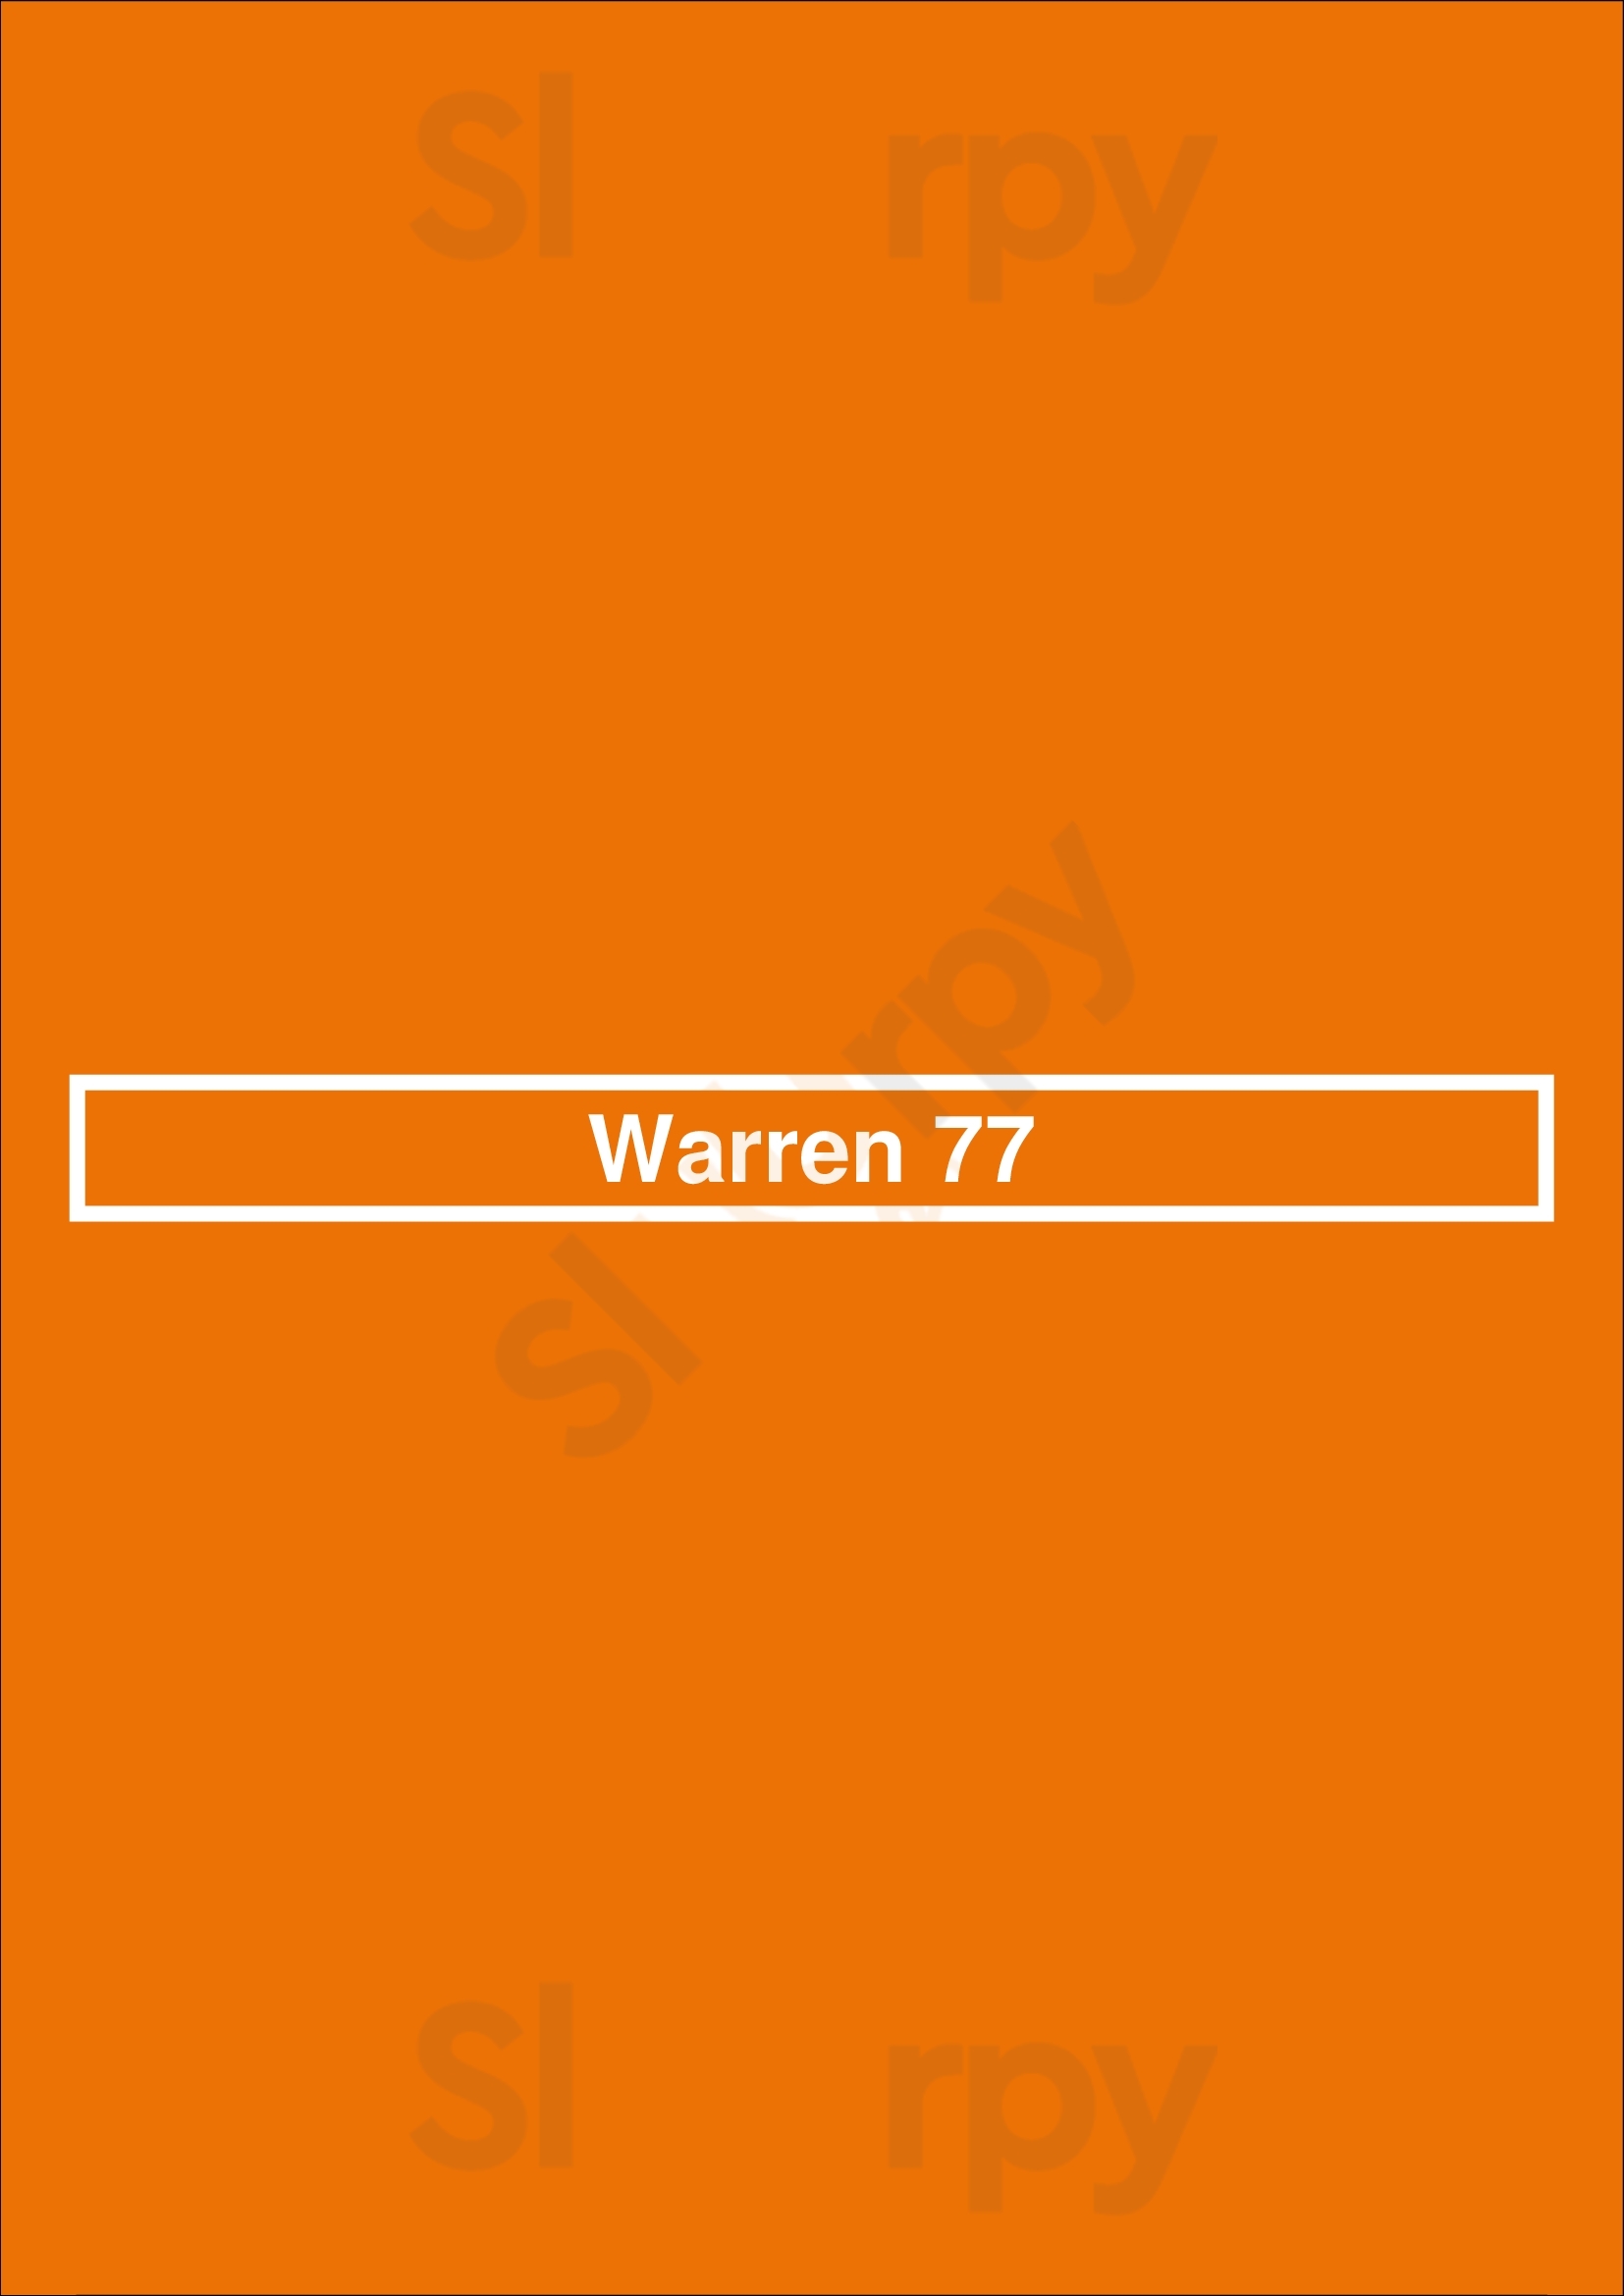 Warren 77 New York City Menu - 1